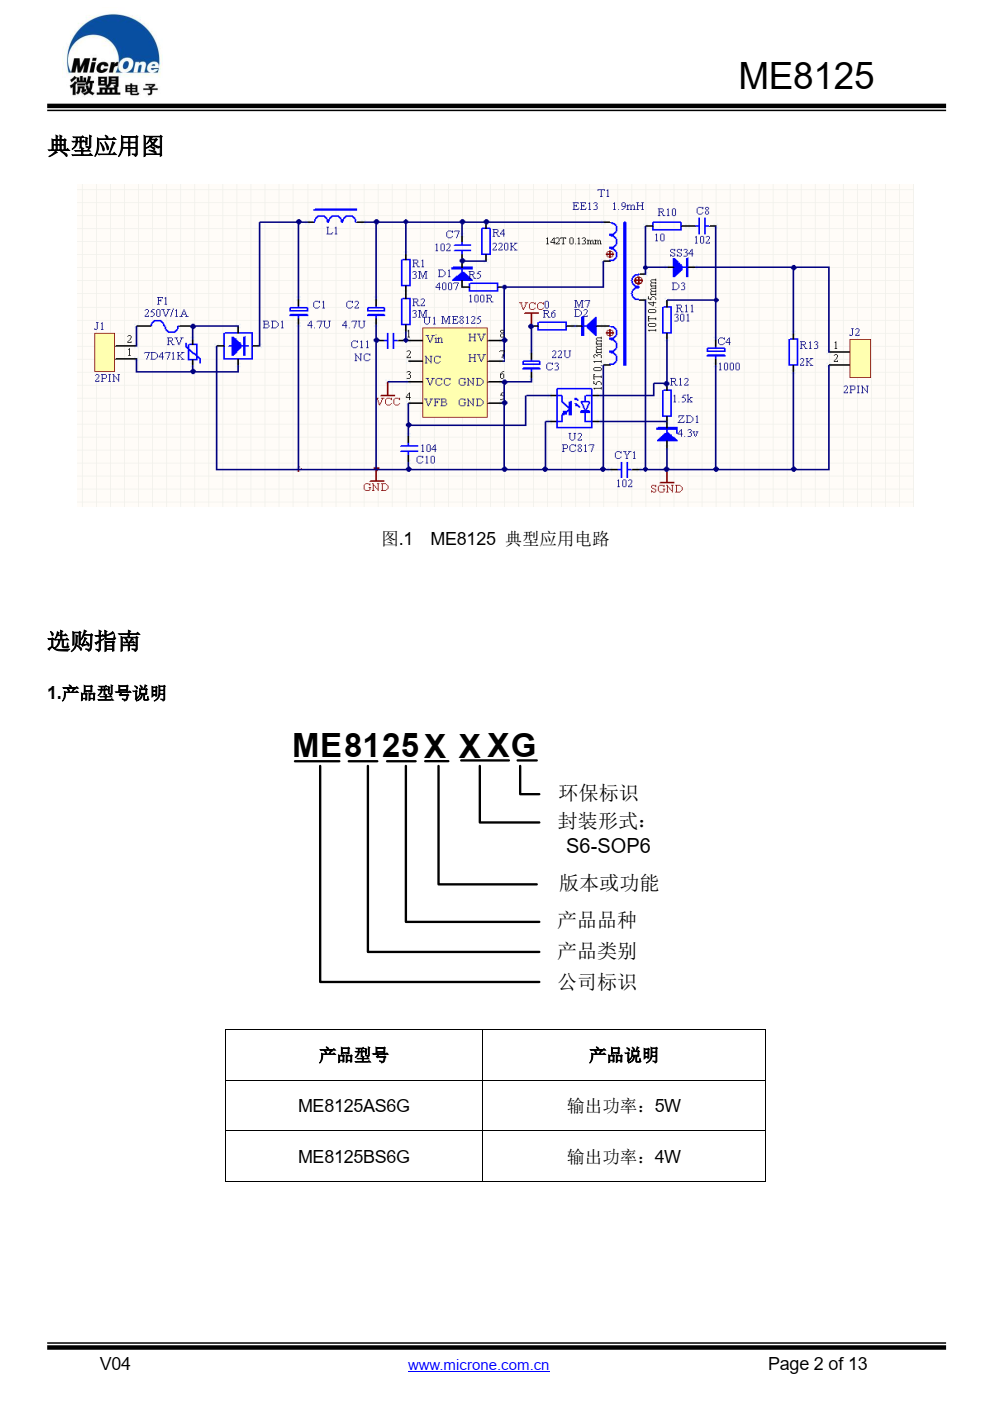 ME8125高性能电流模式PWM控制器，专为高性价比AC/DC 转换器设计